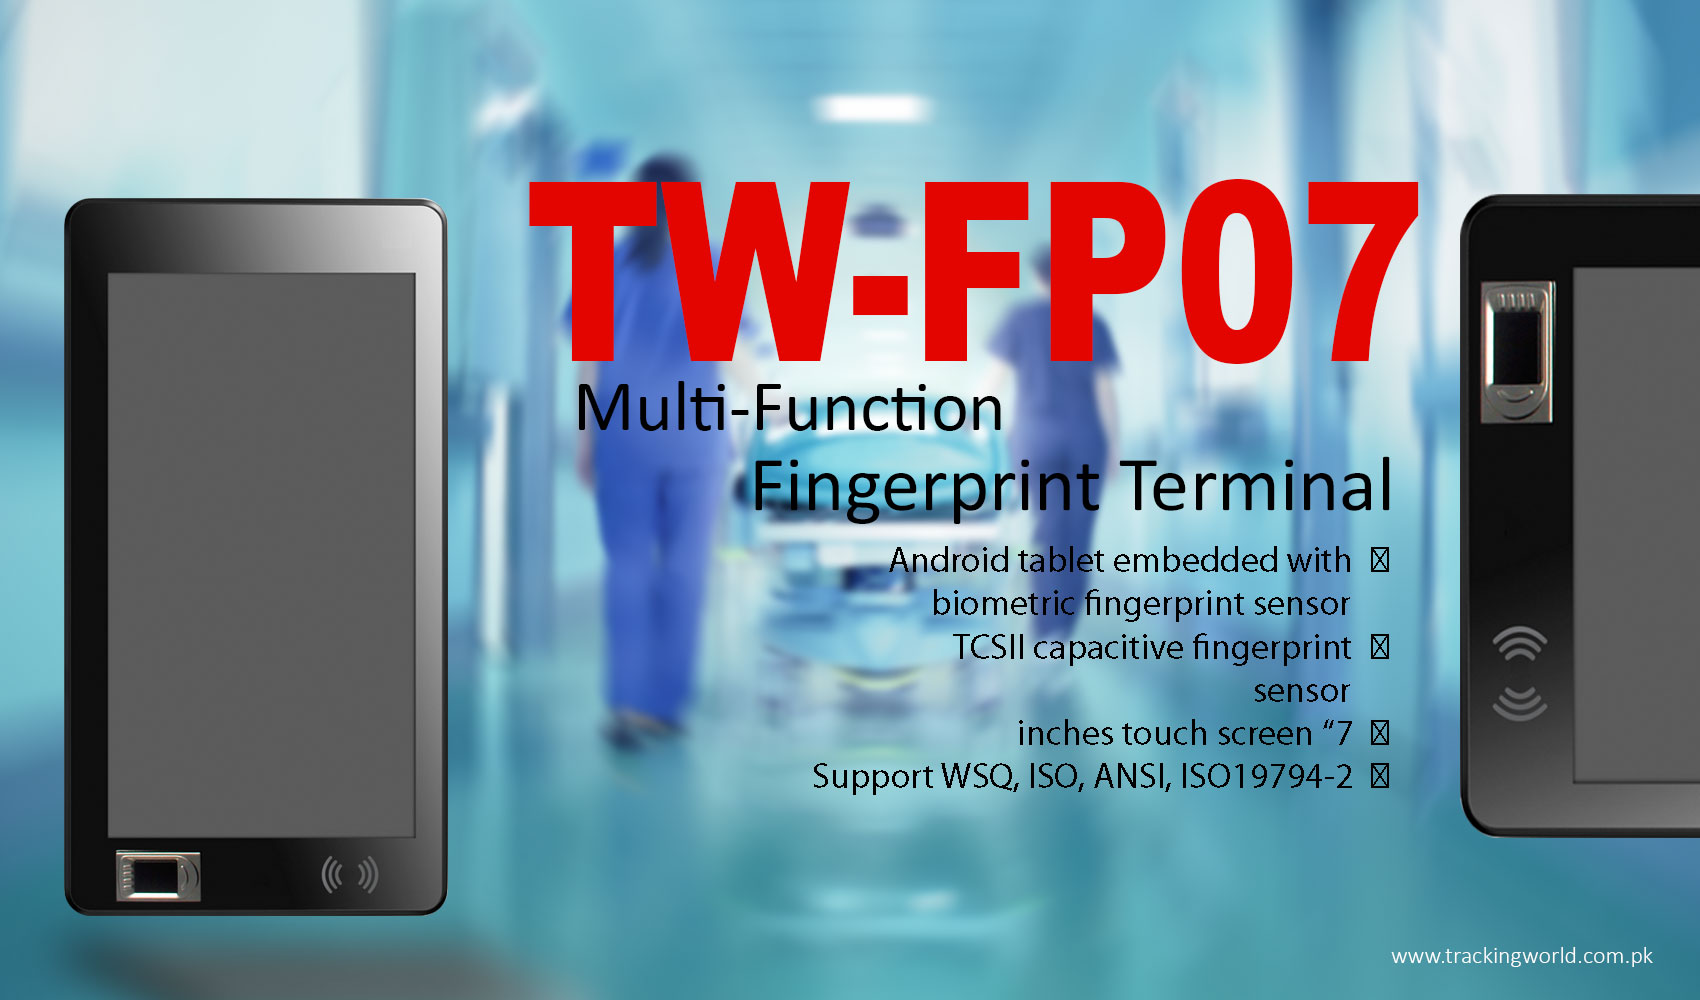 Multi Function Fingerprint Terminal - FP07